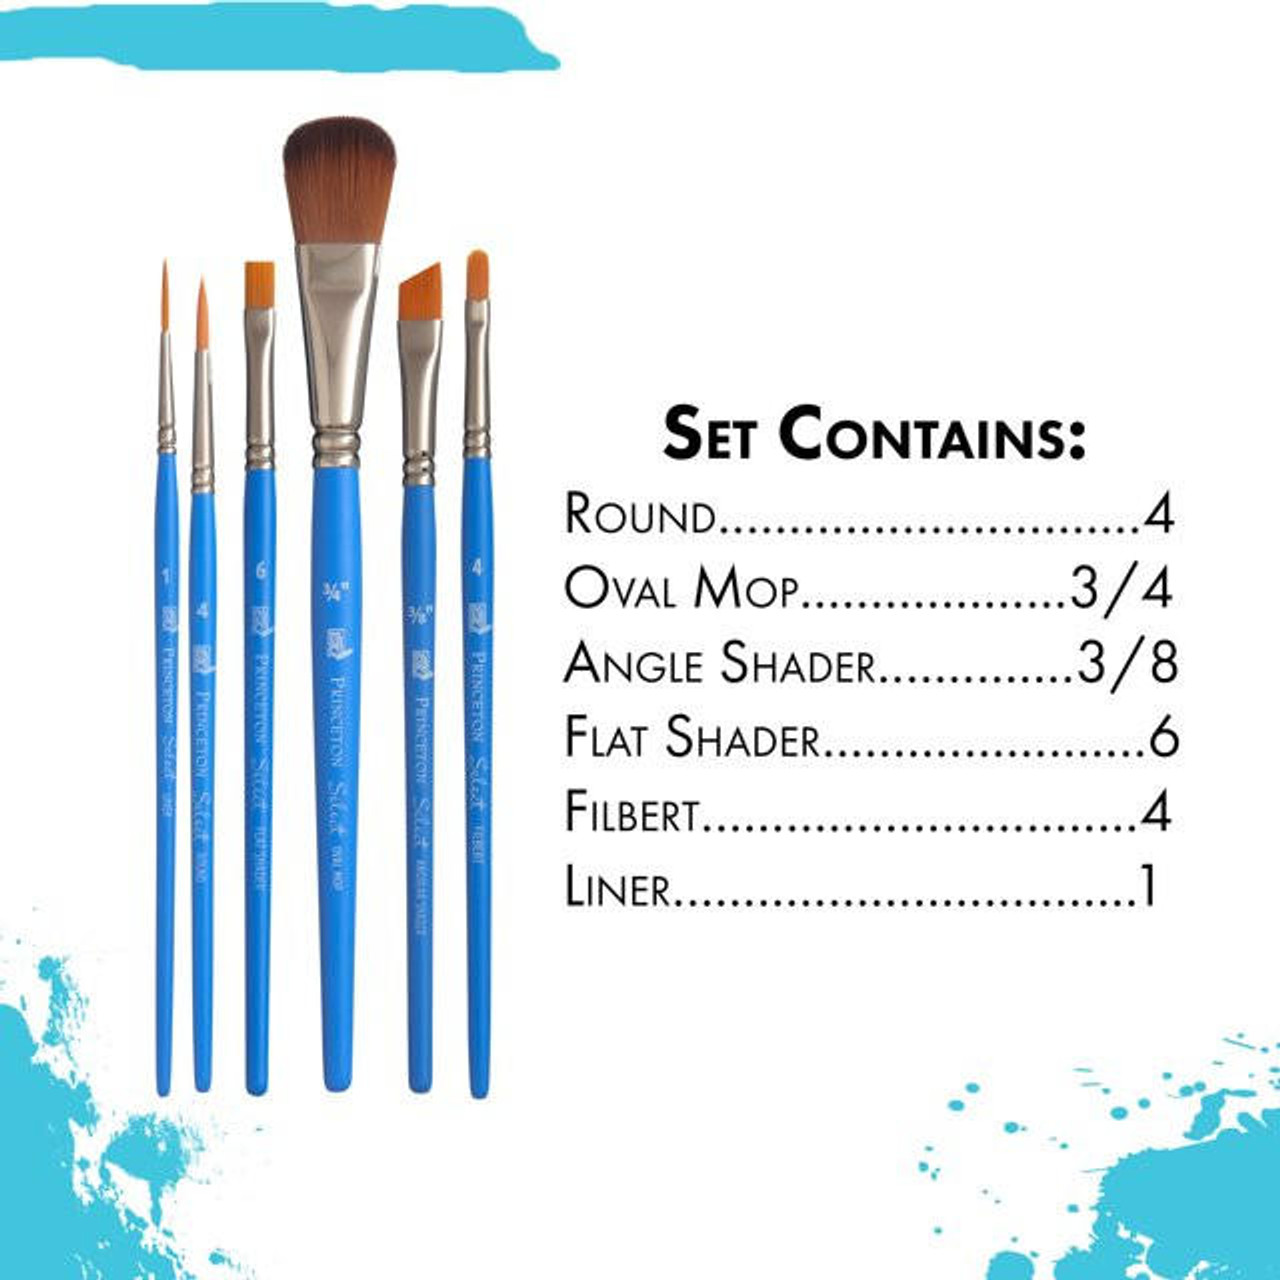 Princeton Brush Select Artiste Brush Value Set #23